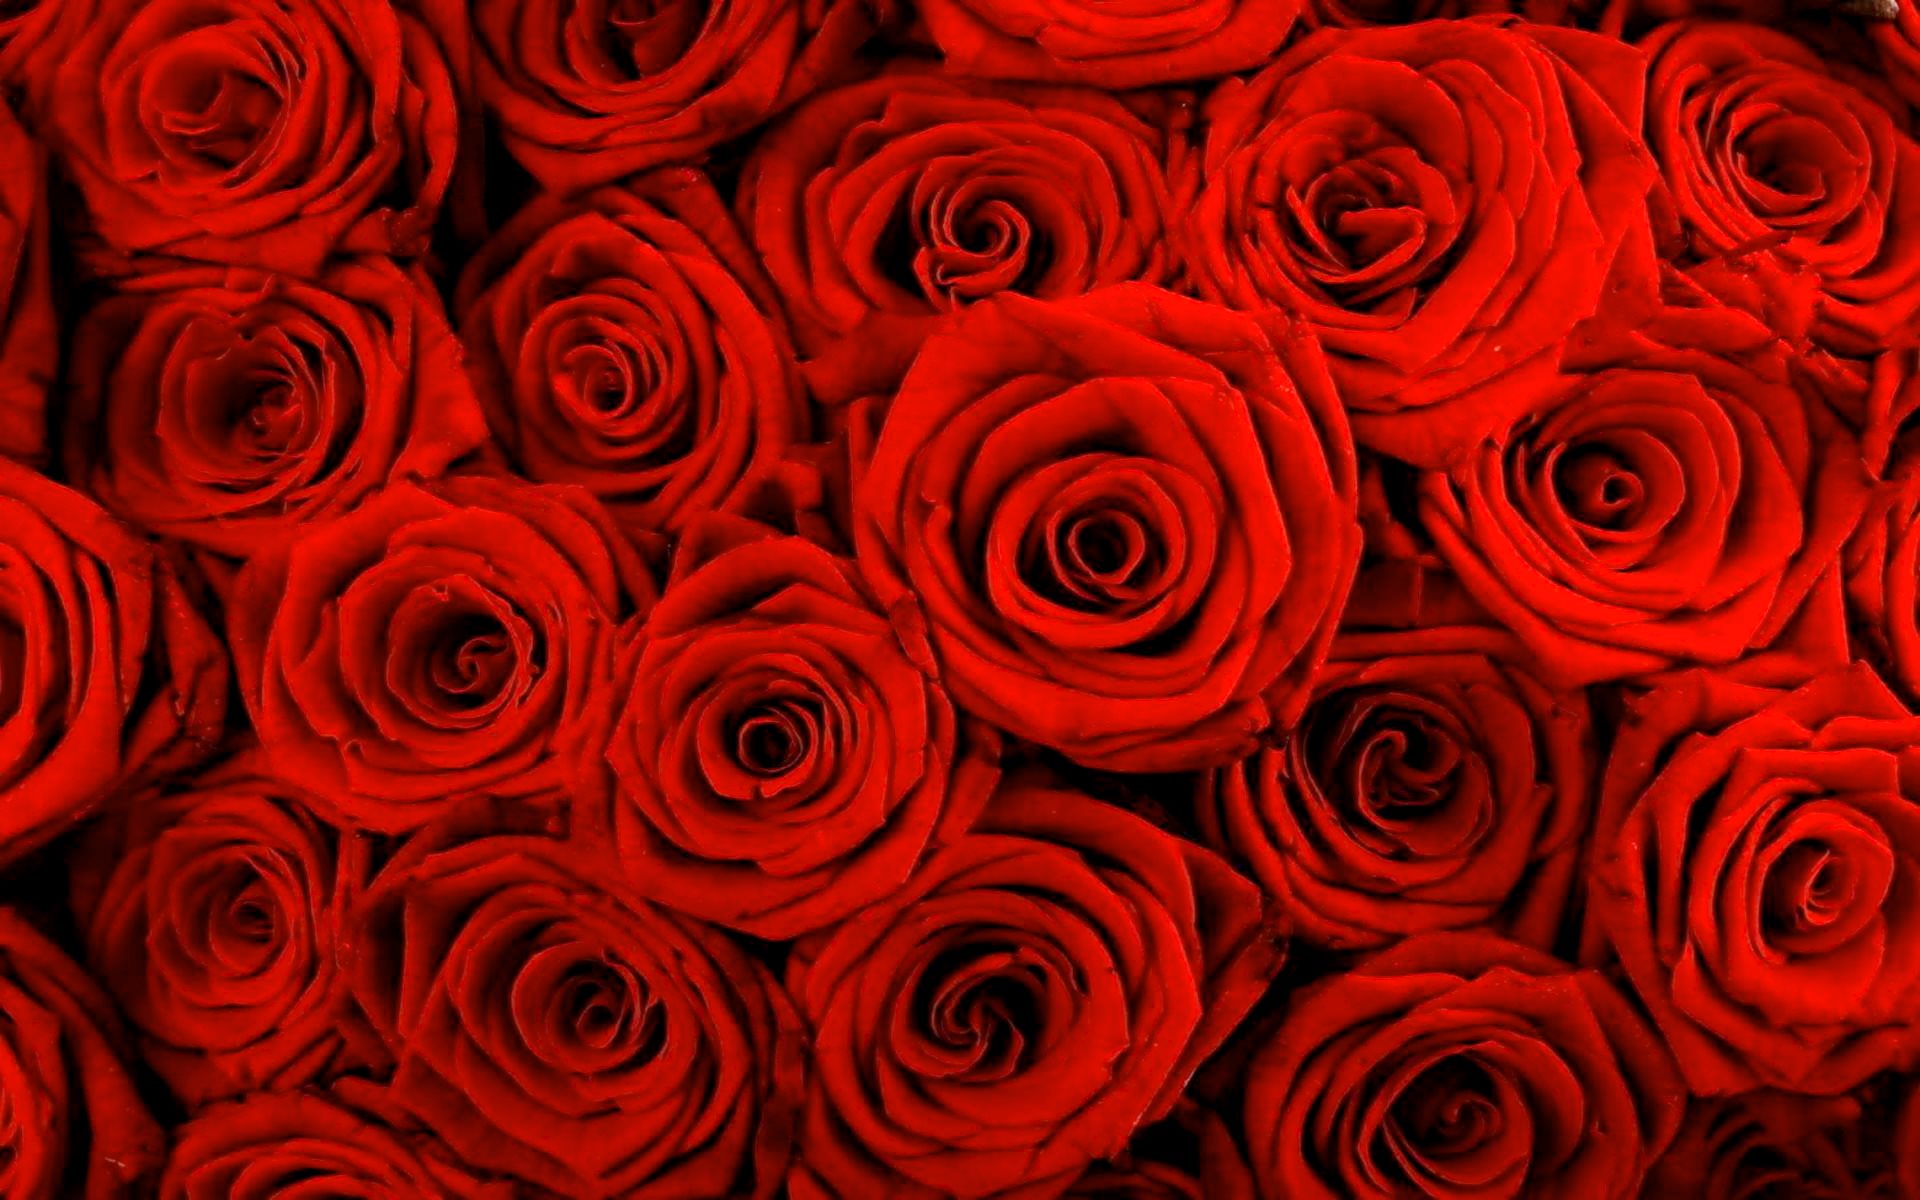 Free Download Red Rose Background Hd Wallpaper Wallpaperspickcom 19x10 For Your Desktop Mobile Tablet Explore 72 Red Rose Background Red Rose Wallpaper Free Download Red Rose Wallpaper For